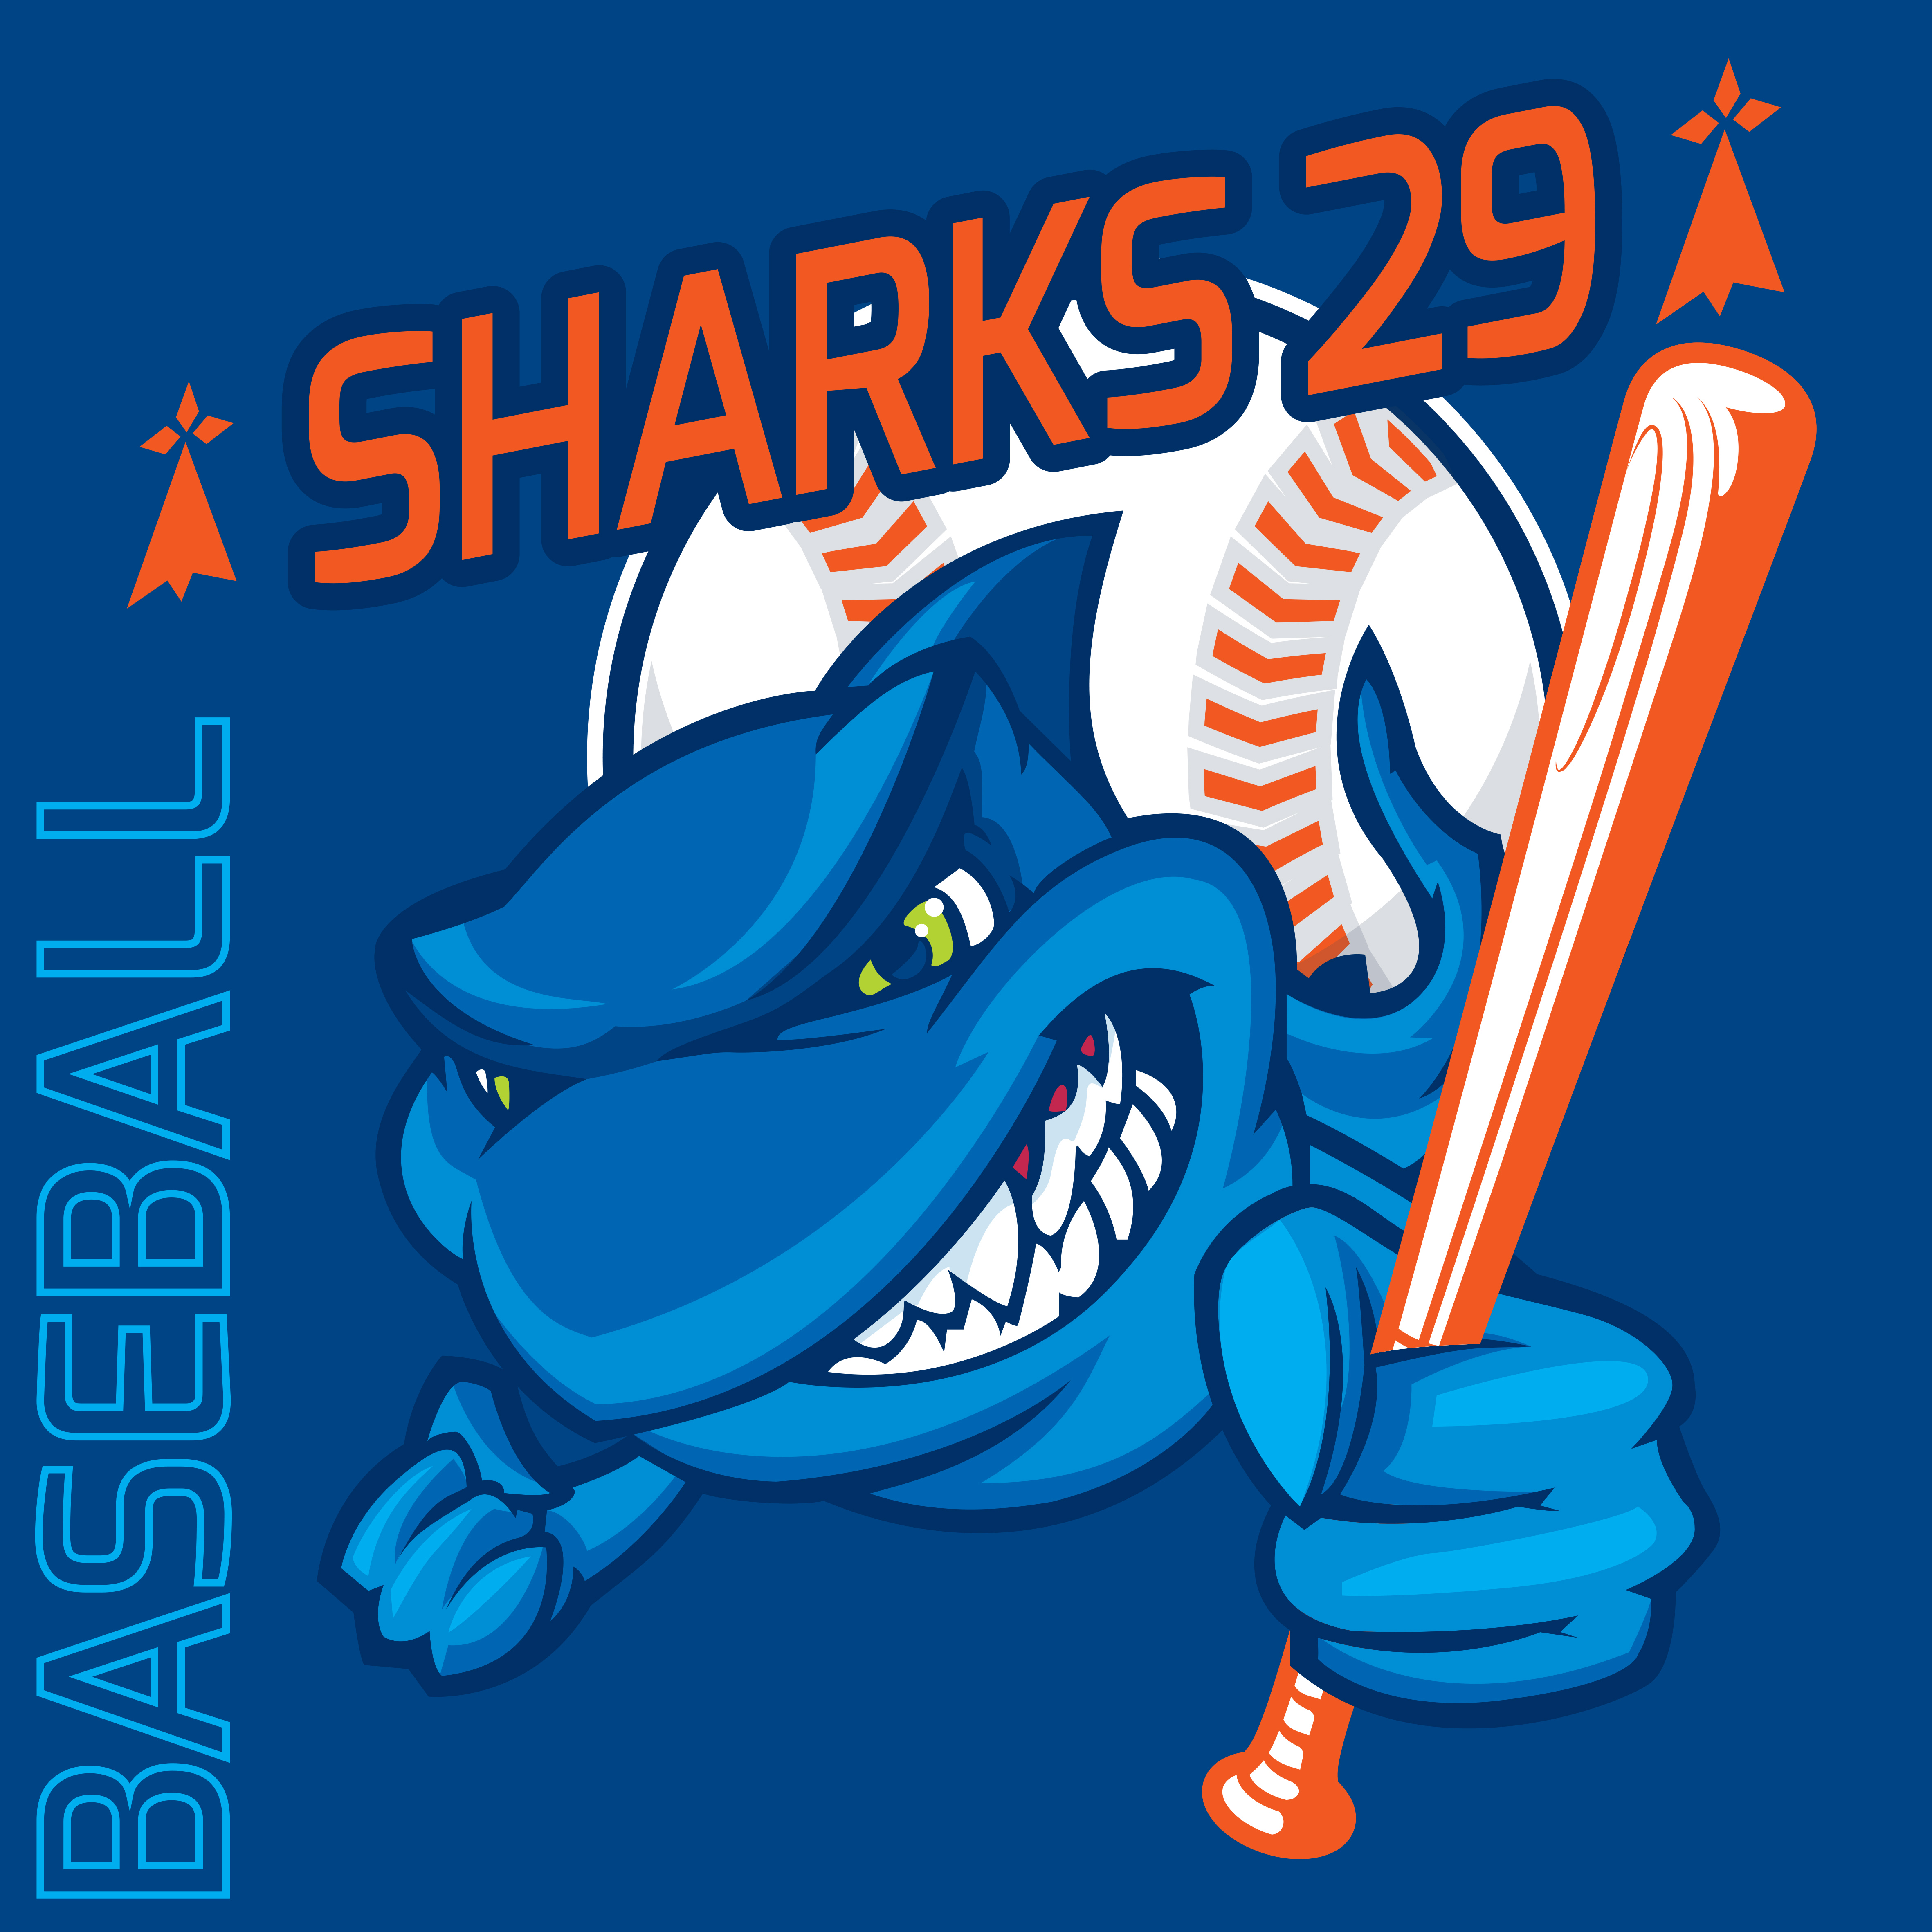 Baseball Softball Club de Quimper - Sharks 29